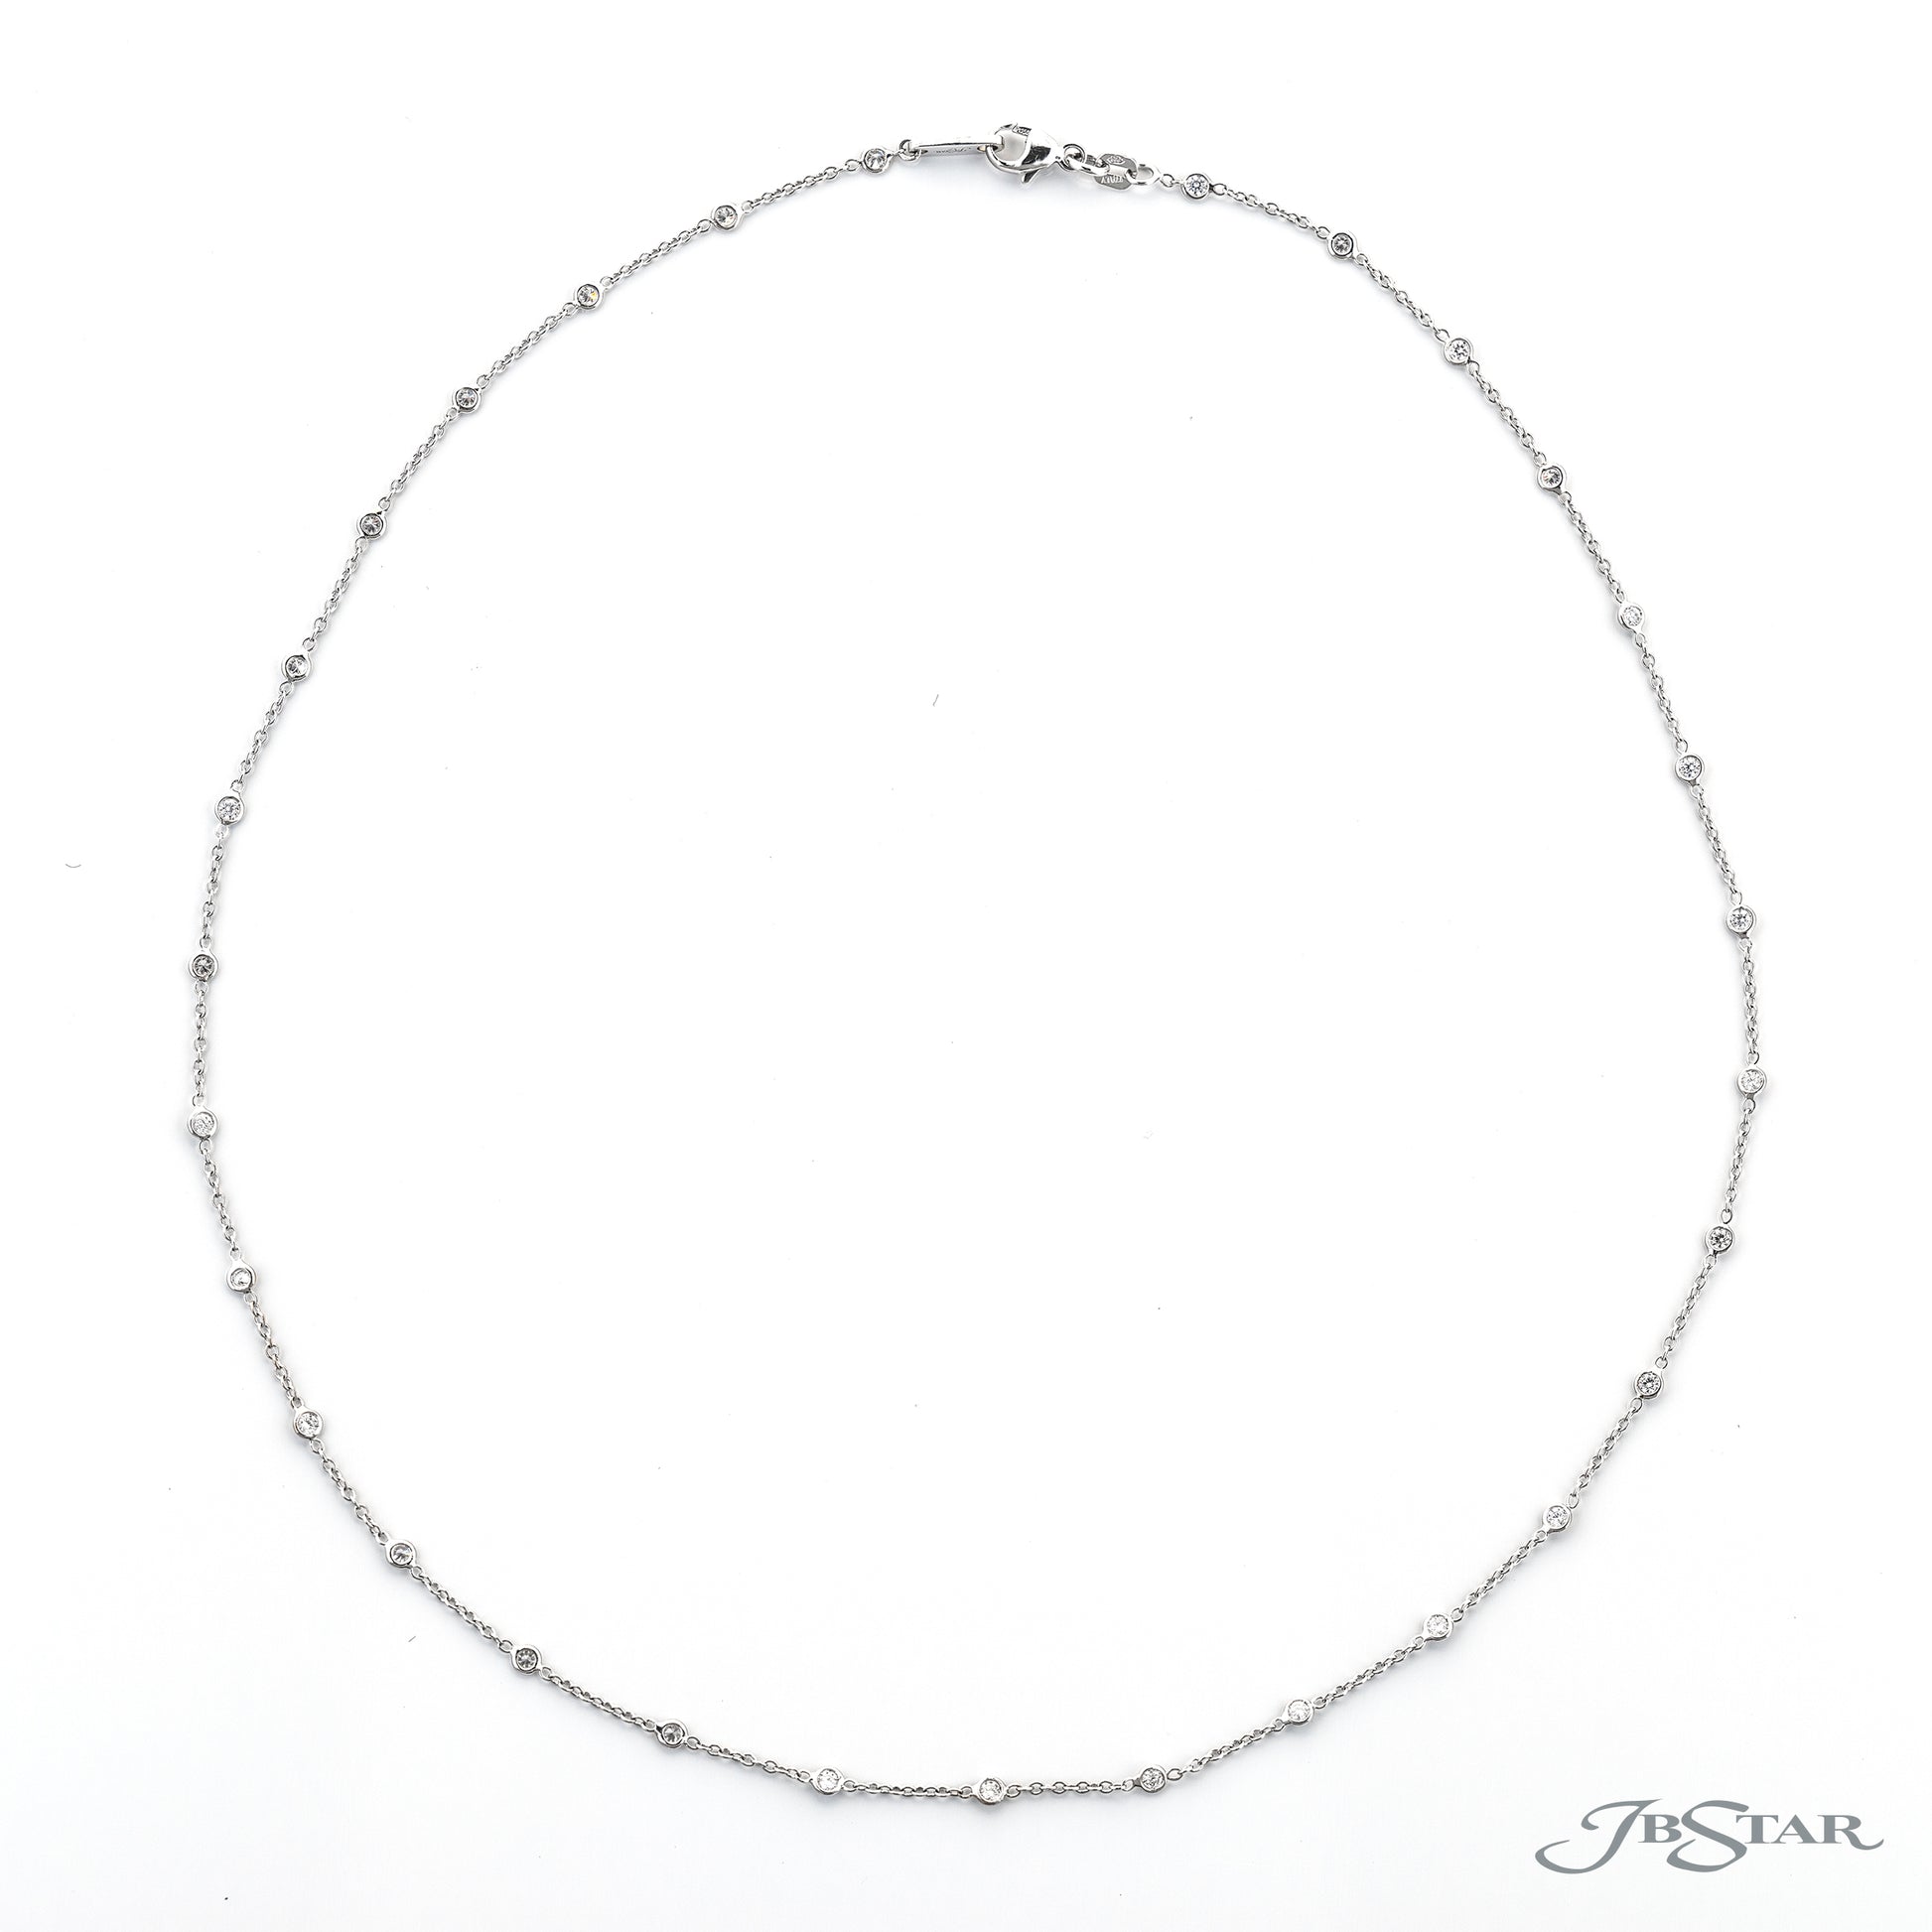 JB Star Platinum Diamonds-By-The-Inch Chain - Diamond Necklaces